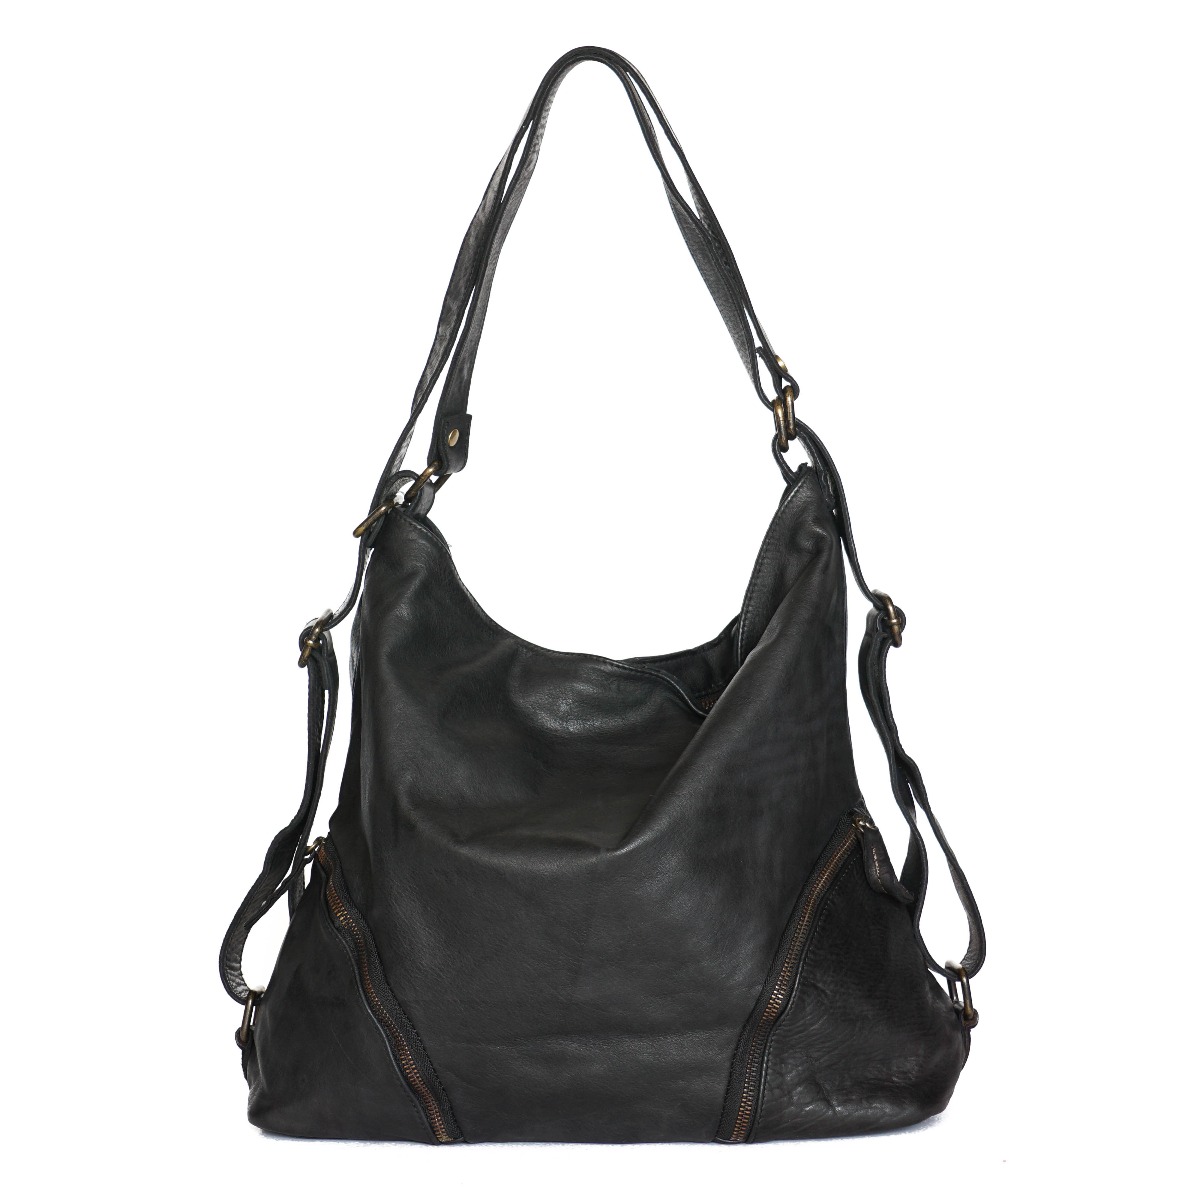 Soft leather black hobo bag and backpack